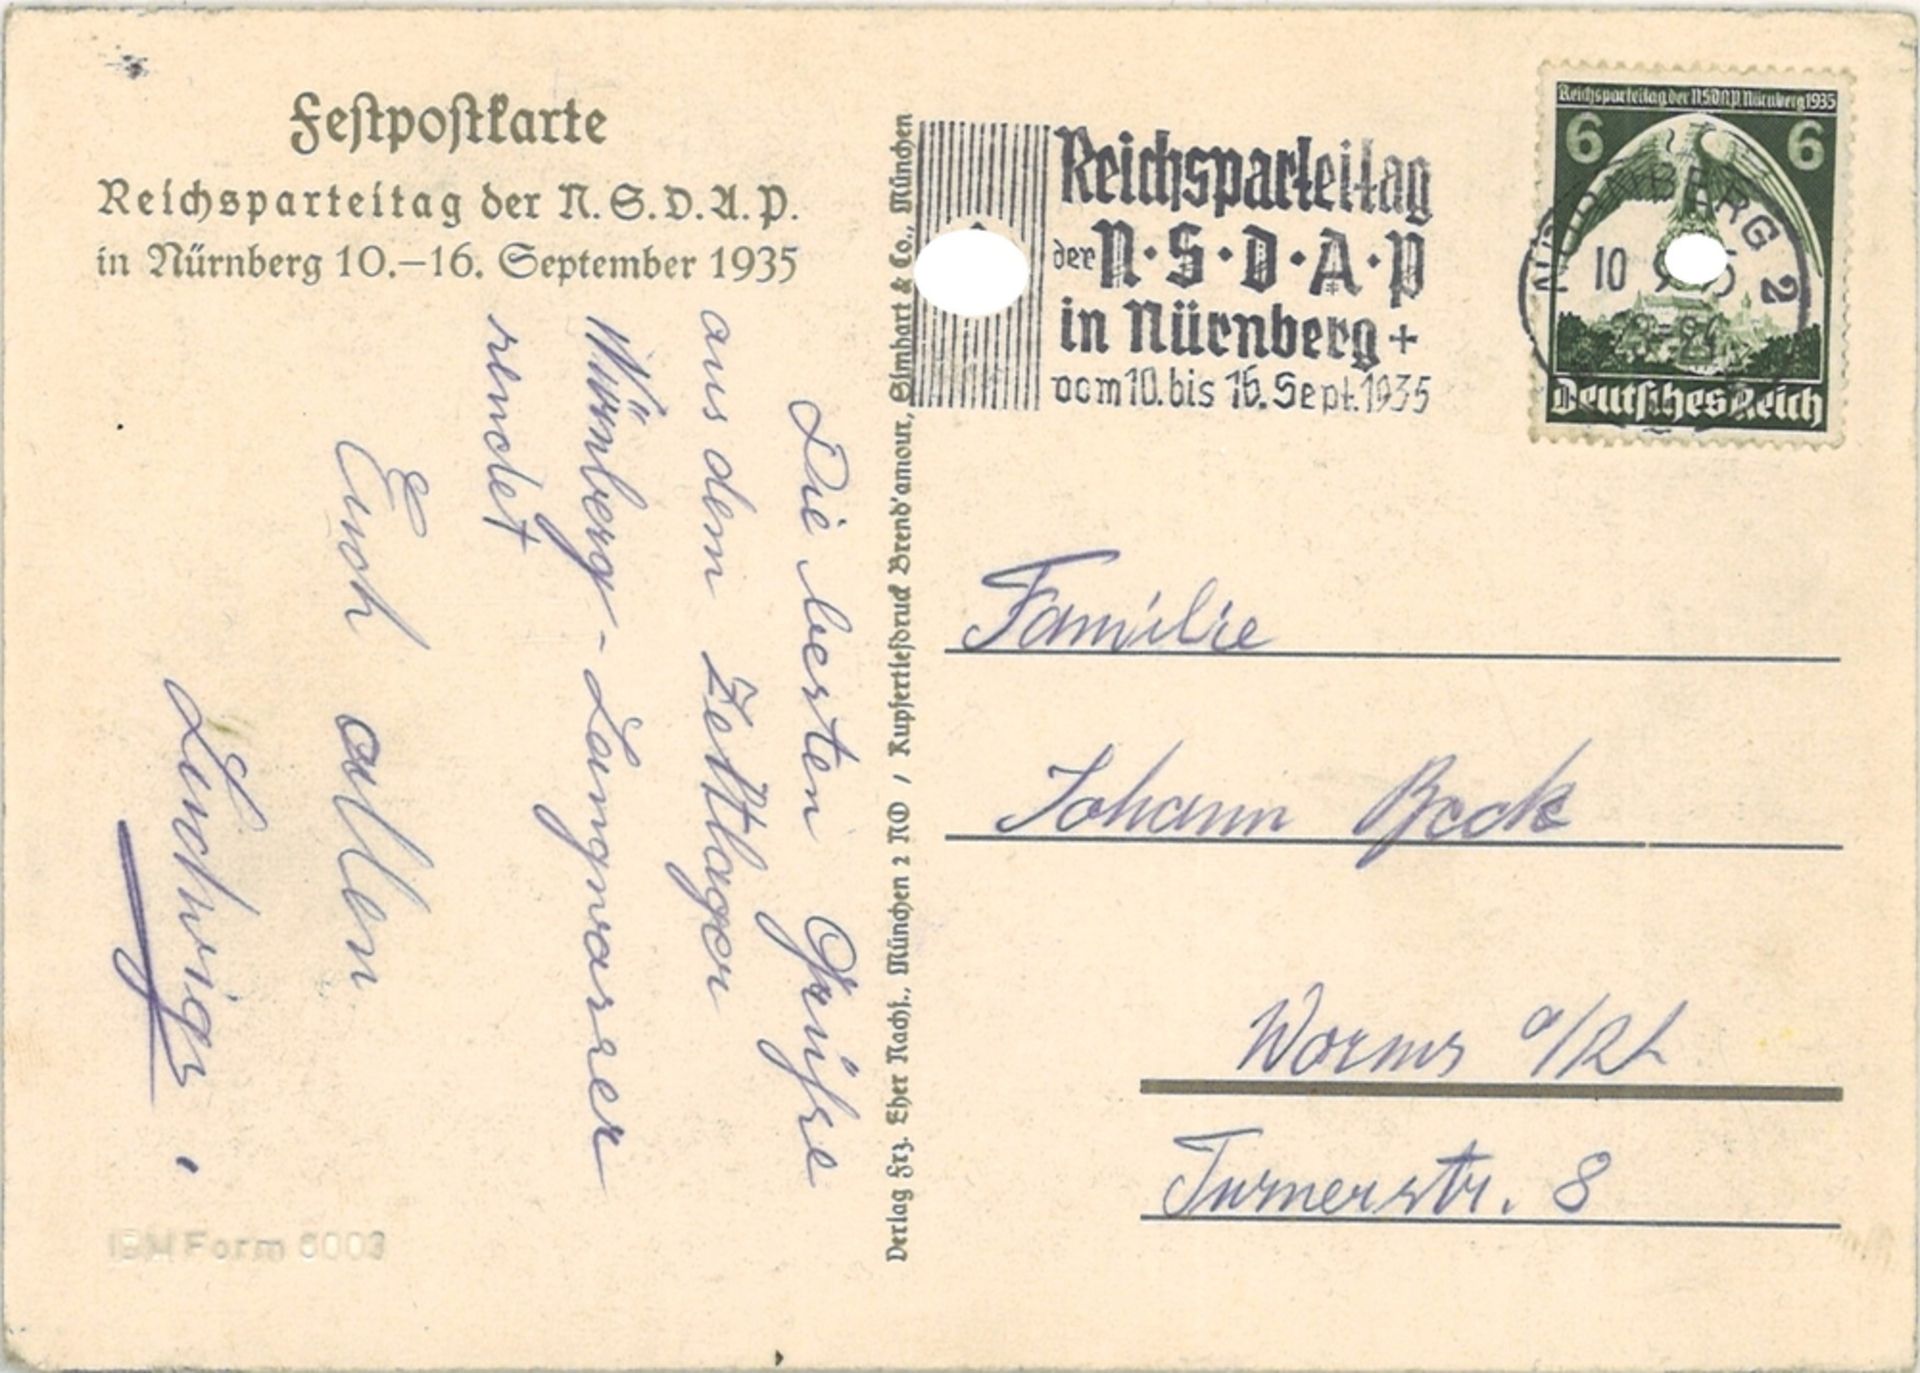 Festpostkarte Reichsparteitag Nürnberg 1935, SA/Hitler/SS Sonderwerbestempel Nürnberg - Image 2 of 2